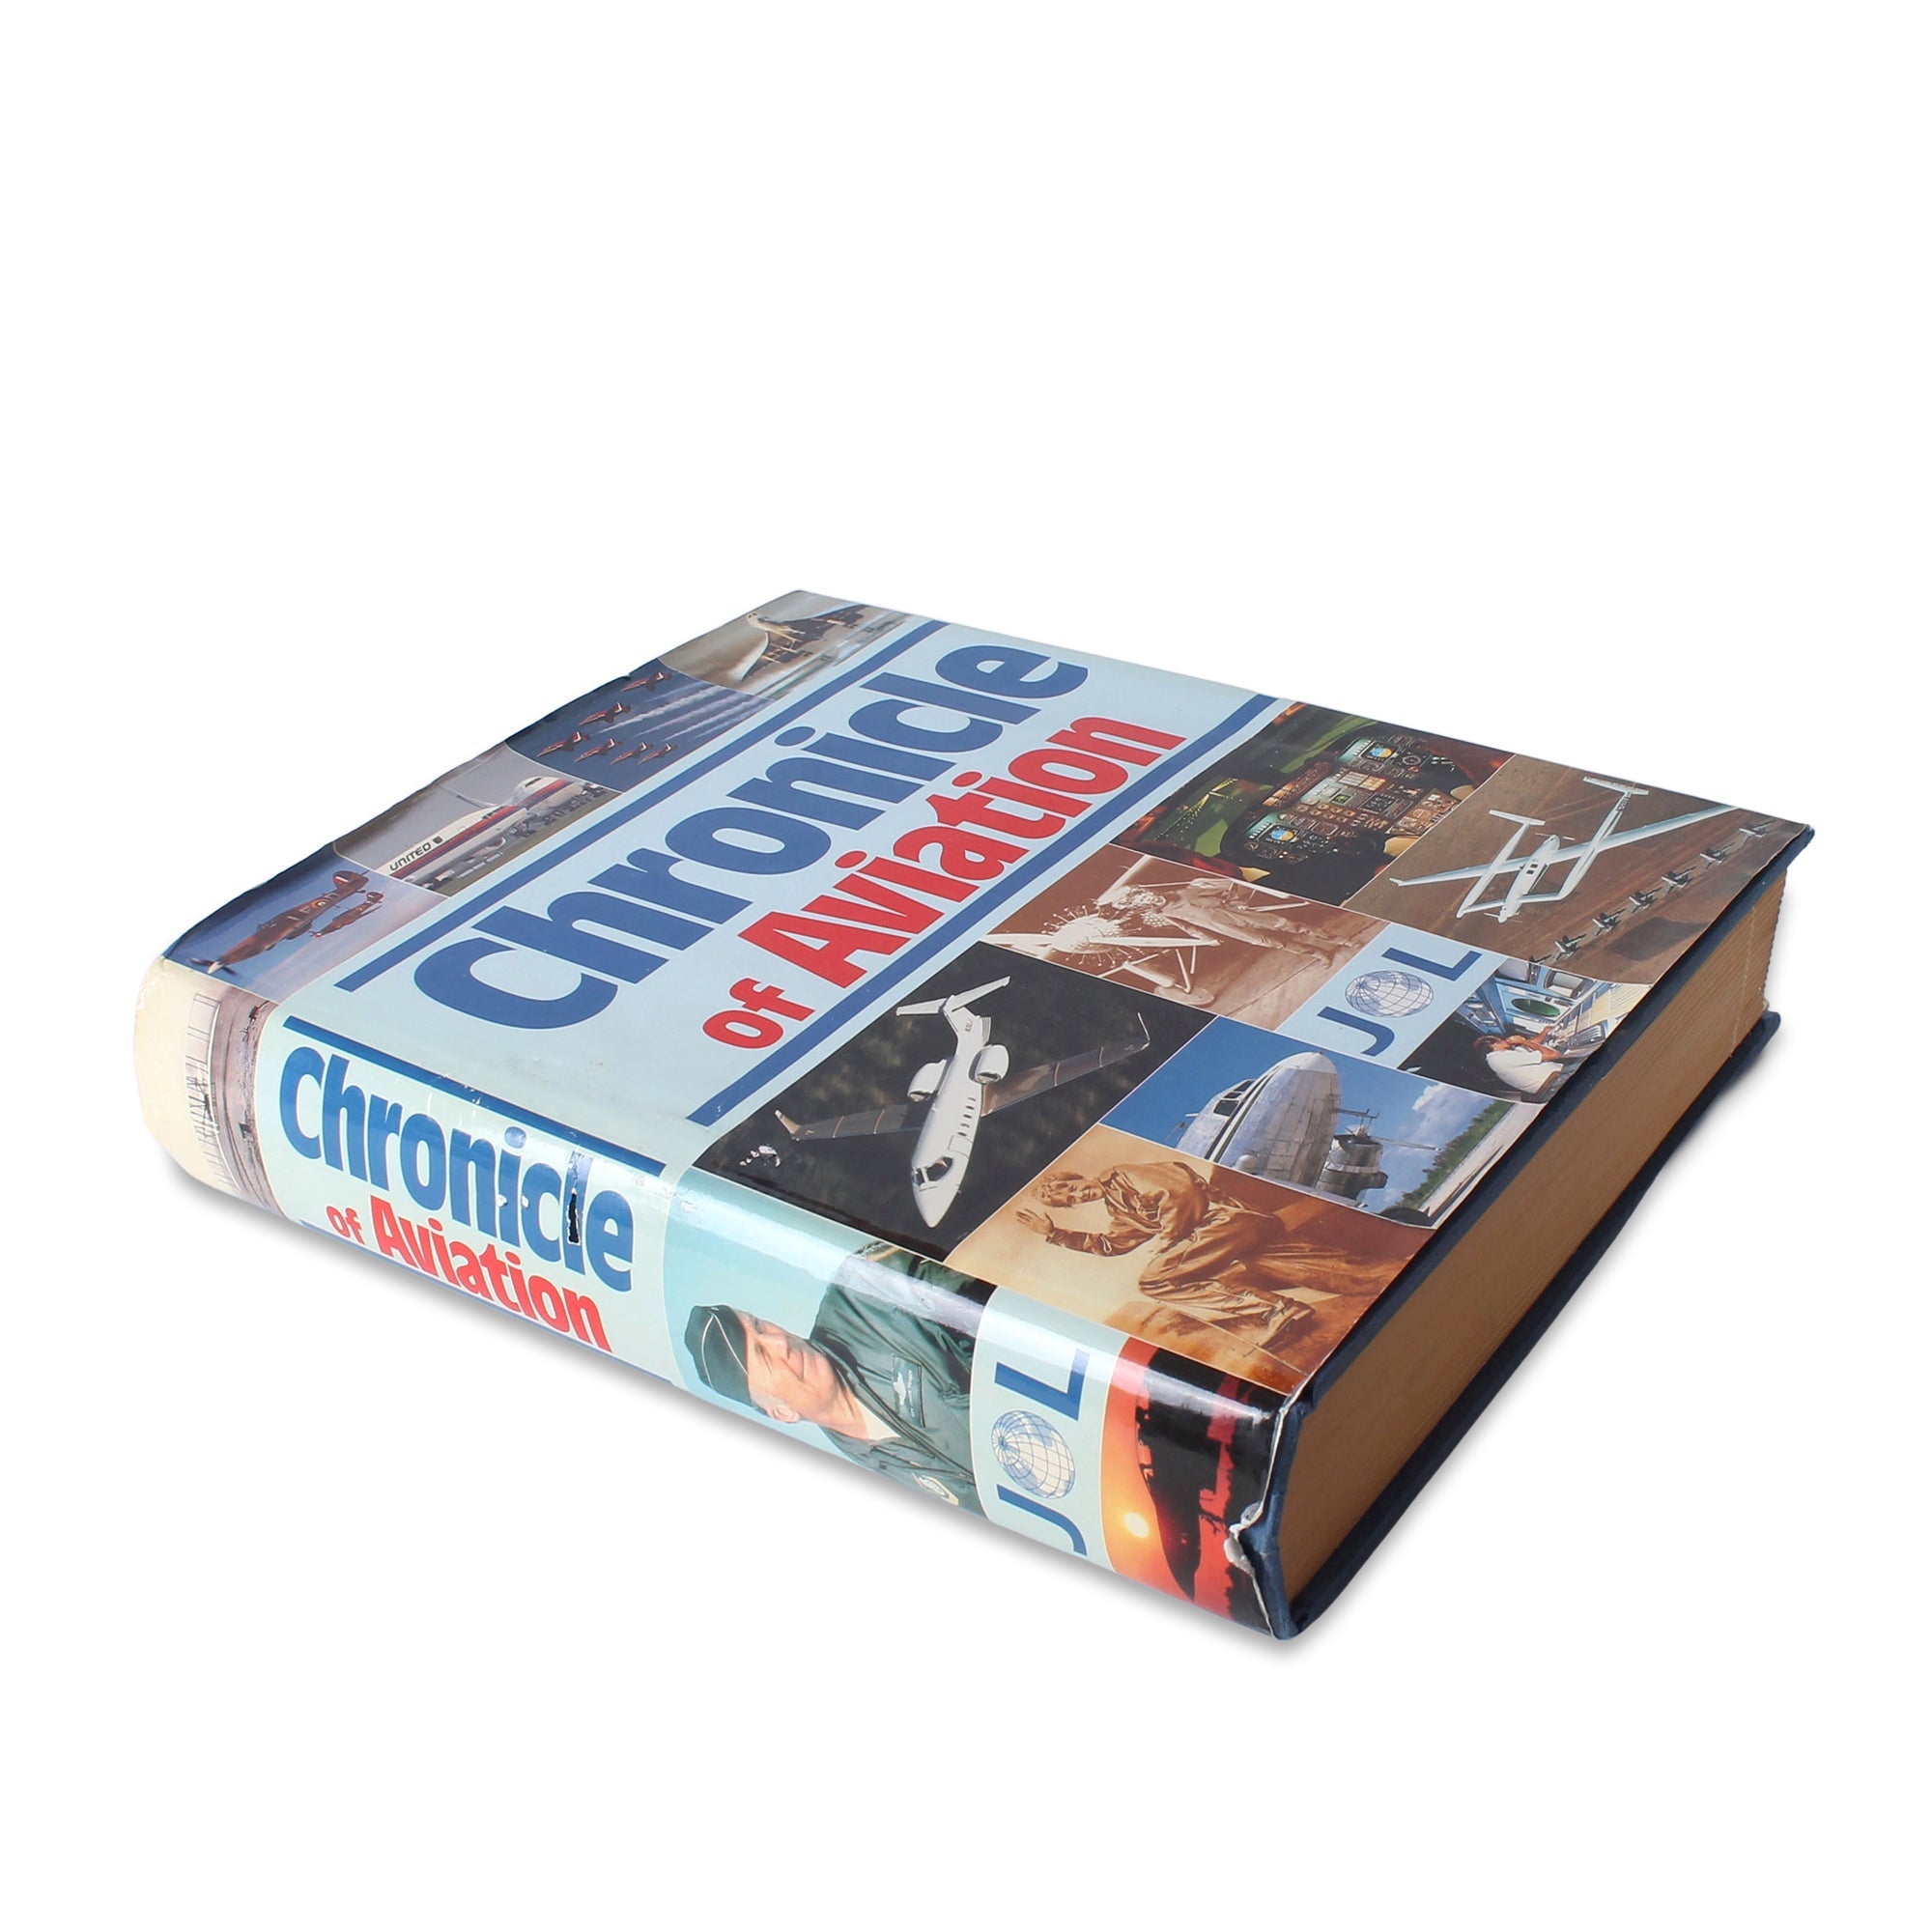 Chronicle of Aviation XXL Book Safe - Secret Storage Books